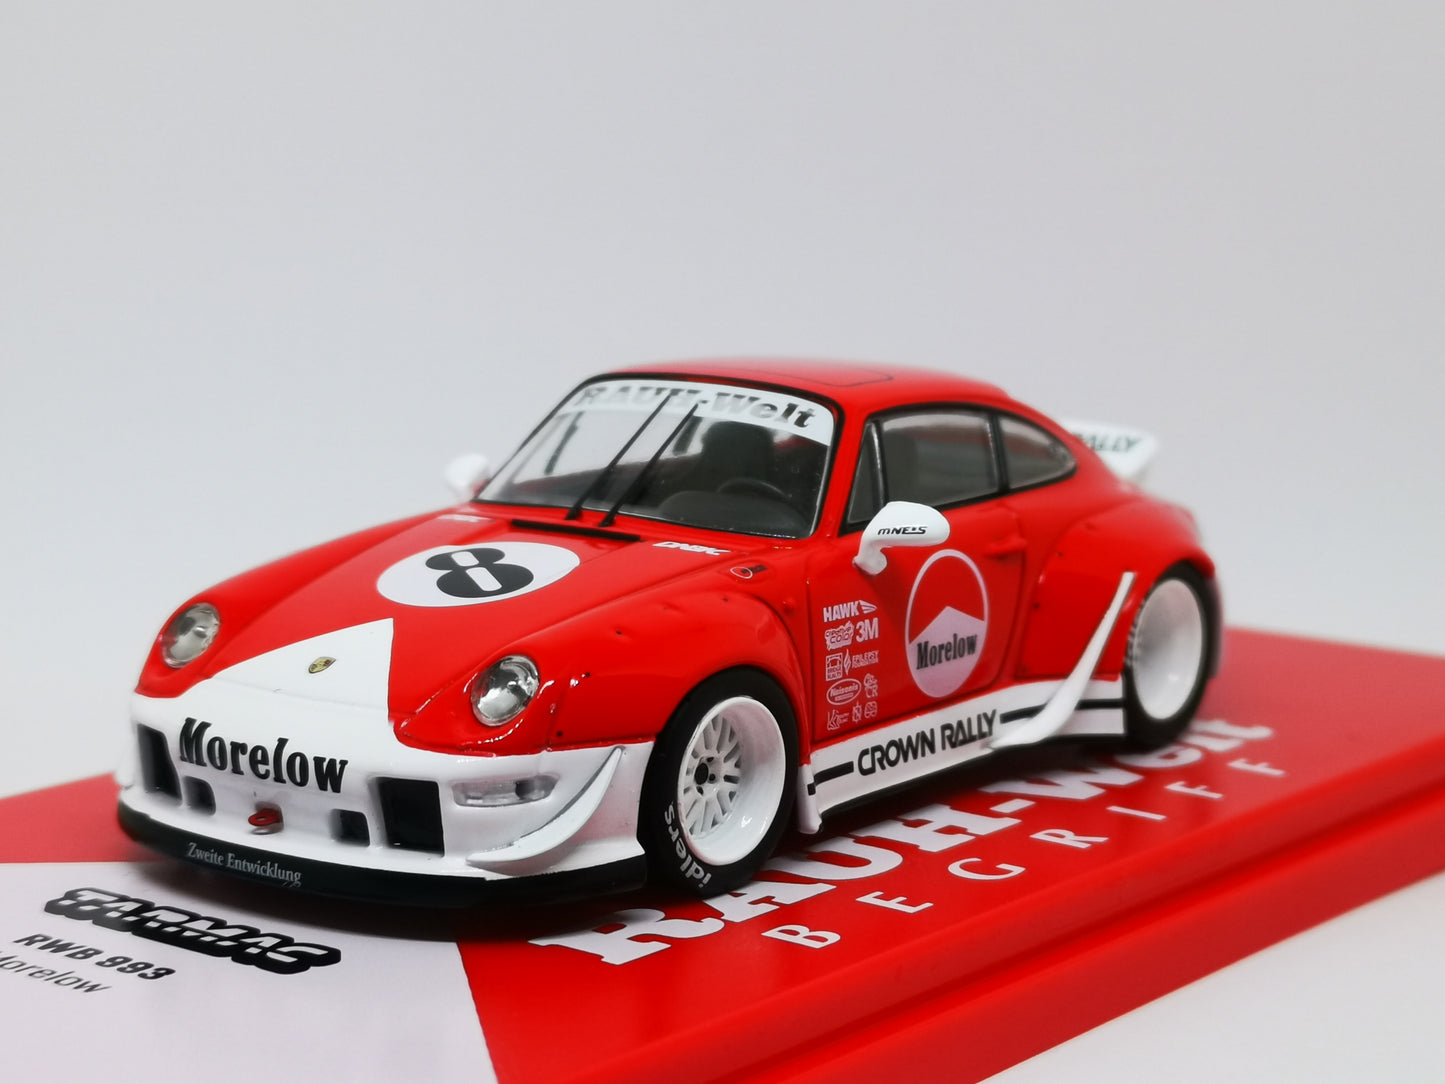 Tarmacworks 1:43 Scale
Porsche 993 RWB Morelow